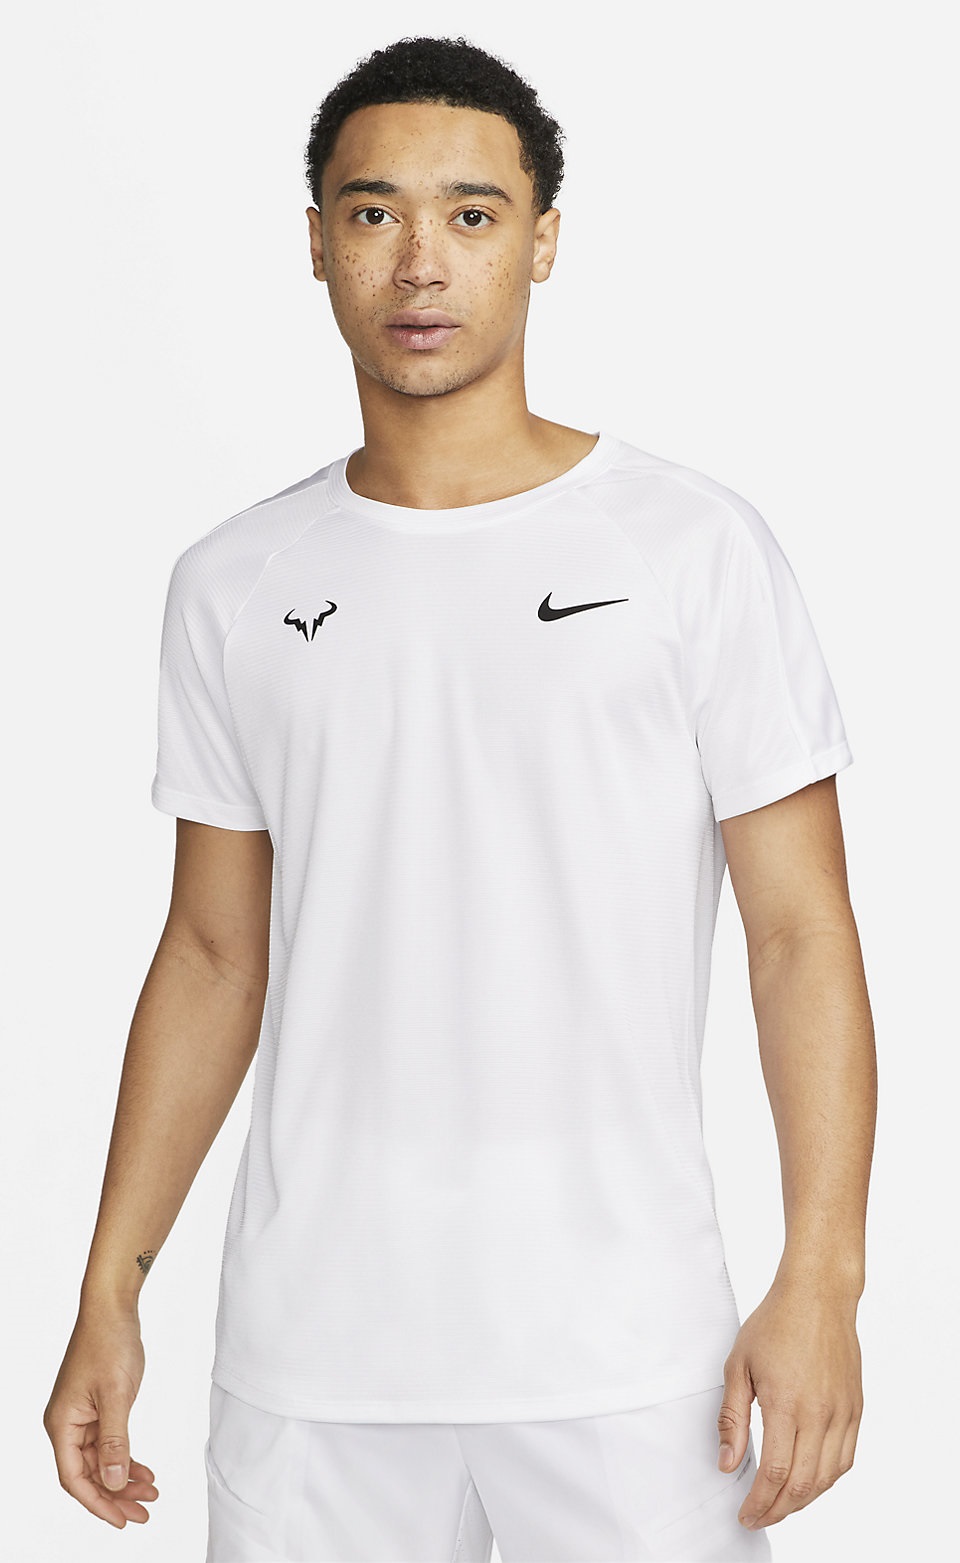 Rafa Challenger Nike Dri-FIT Kısa Kollu Erkek Tenis Üstü